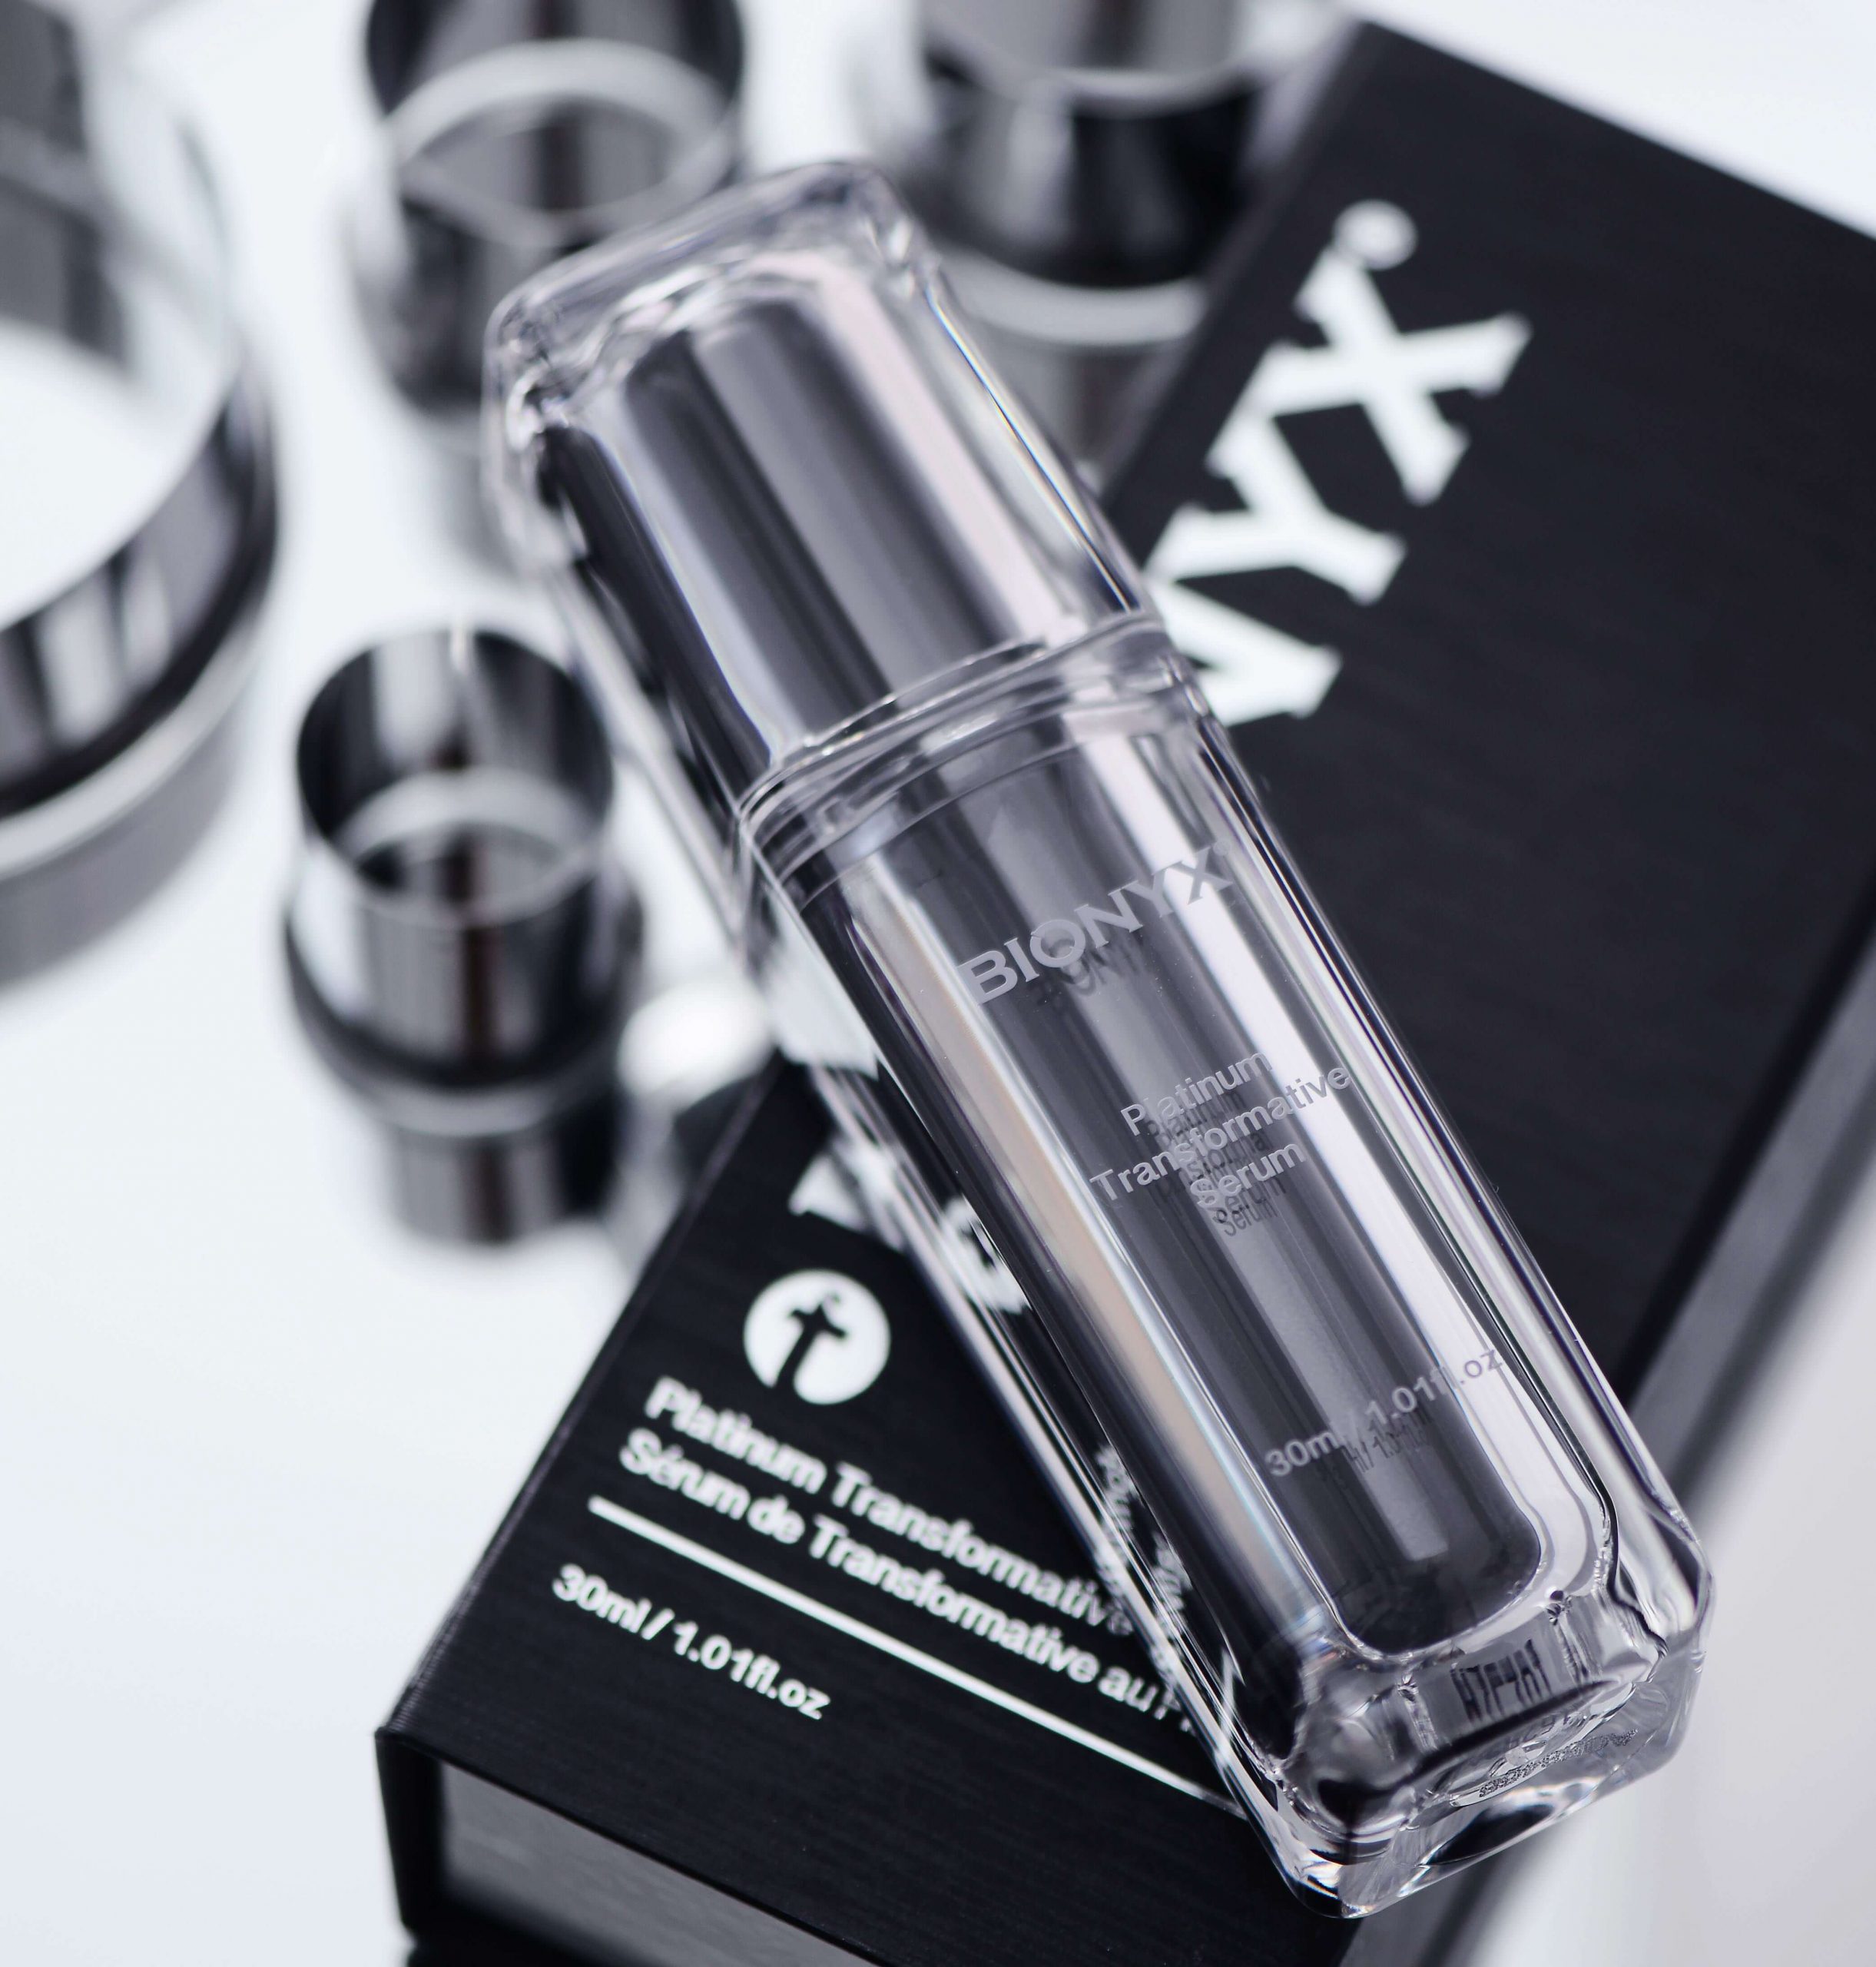 Bionyx Platinum Transformative Serum - New Year’s Resolutions for Your Skin